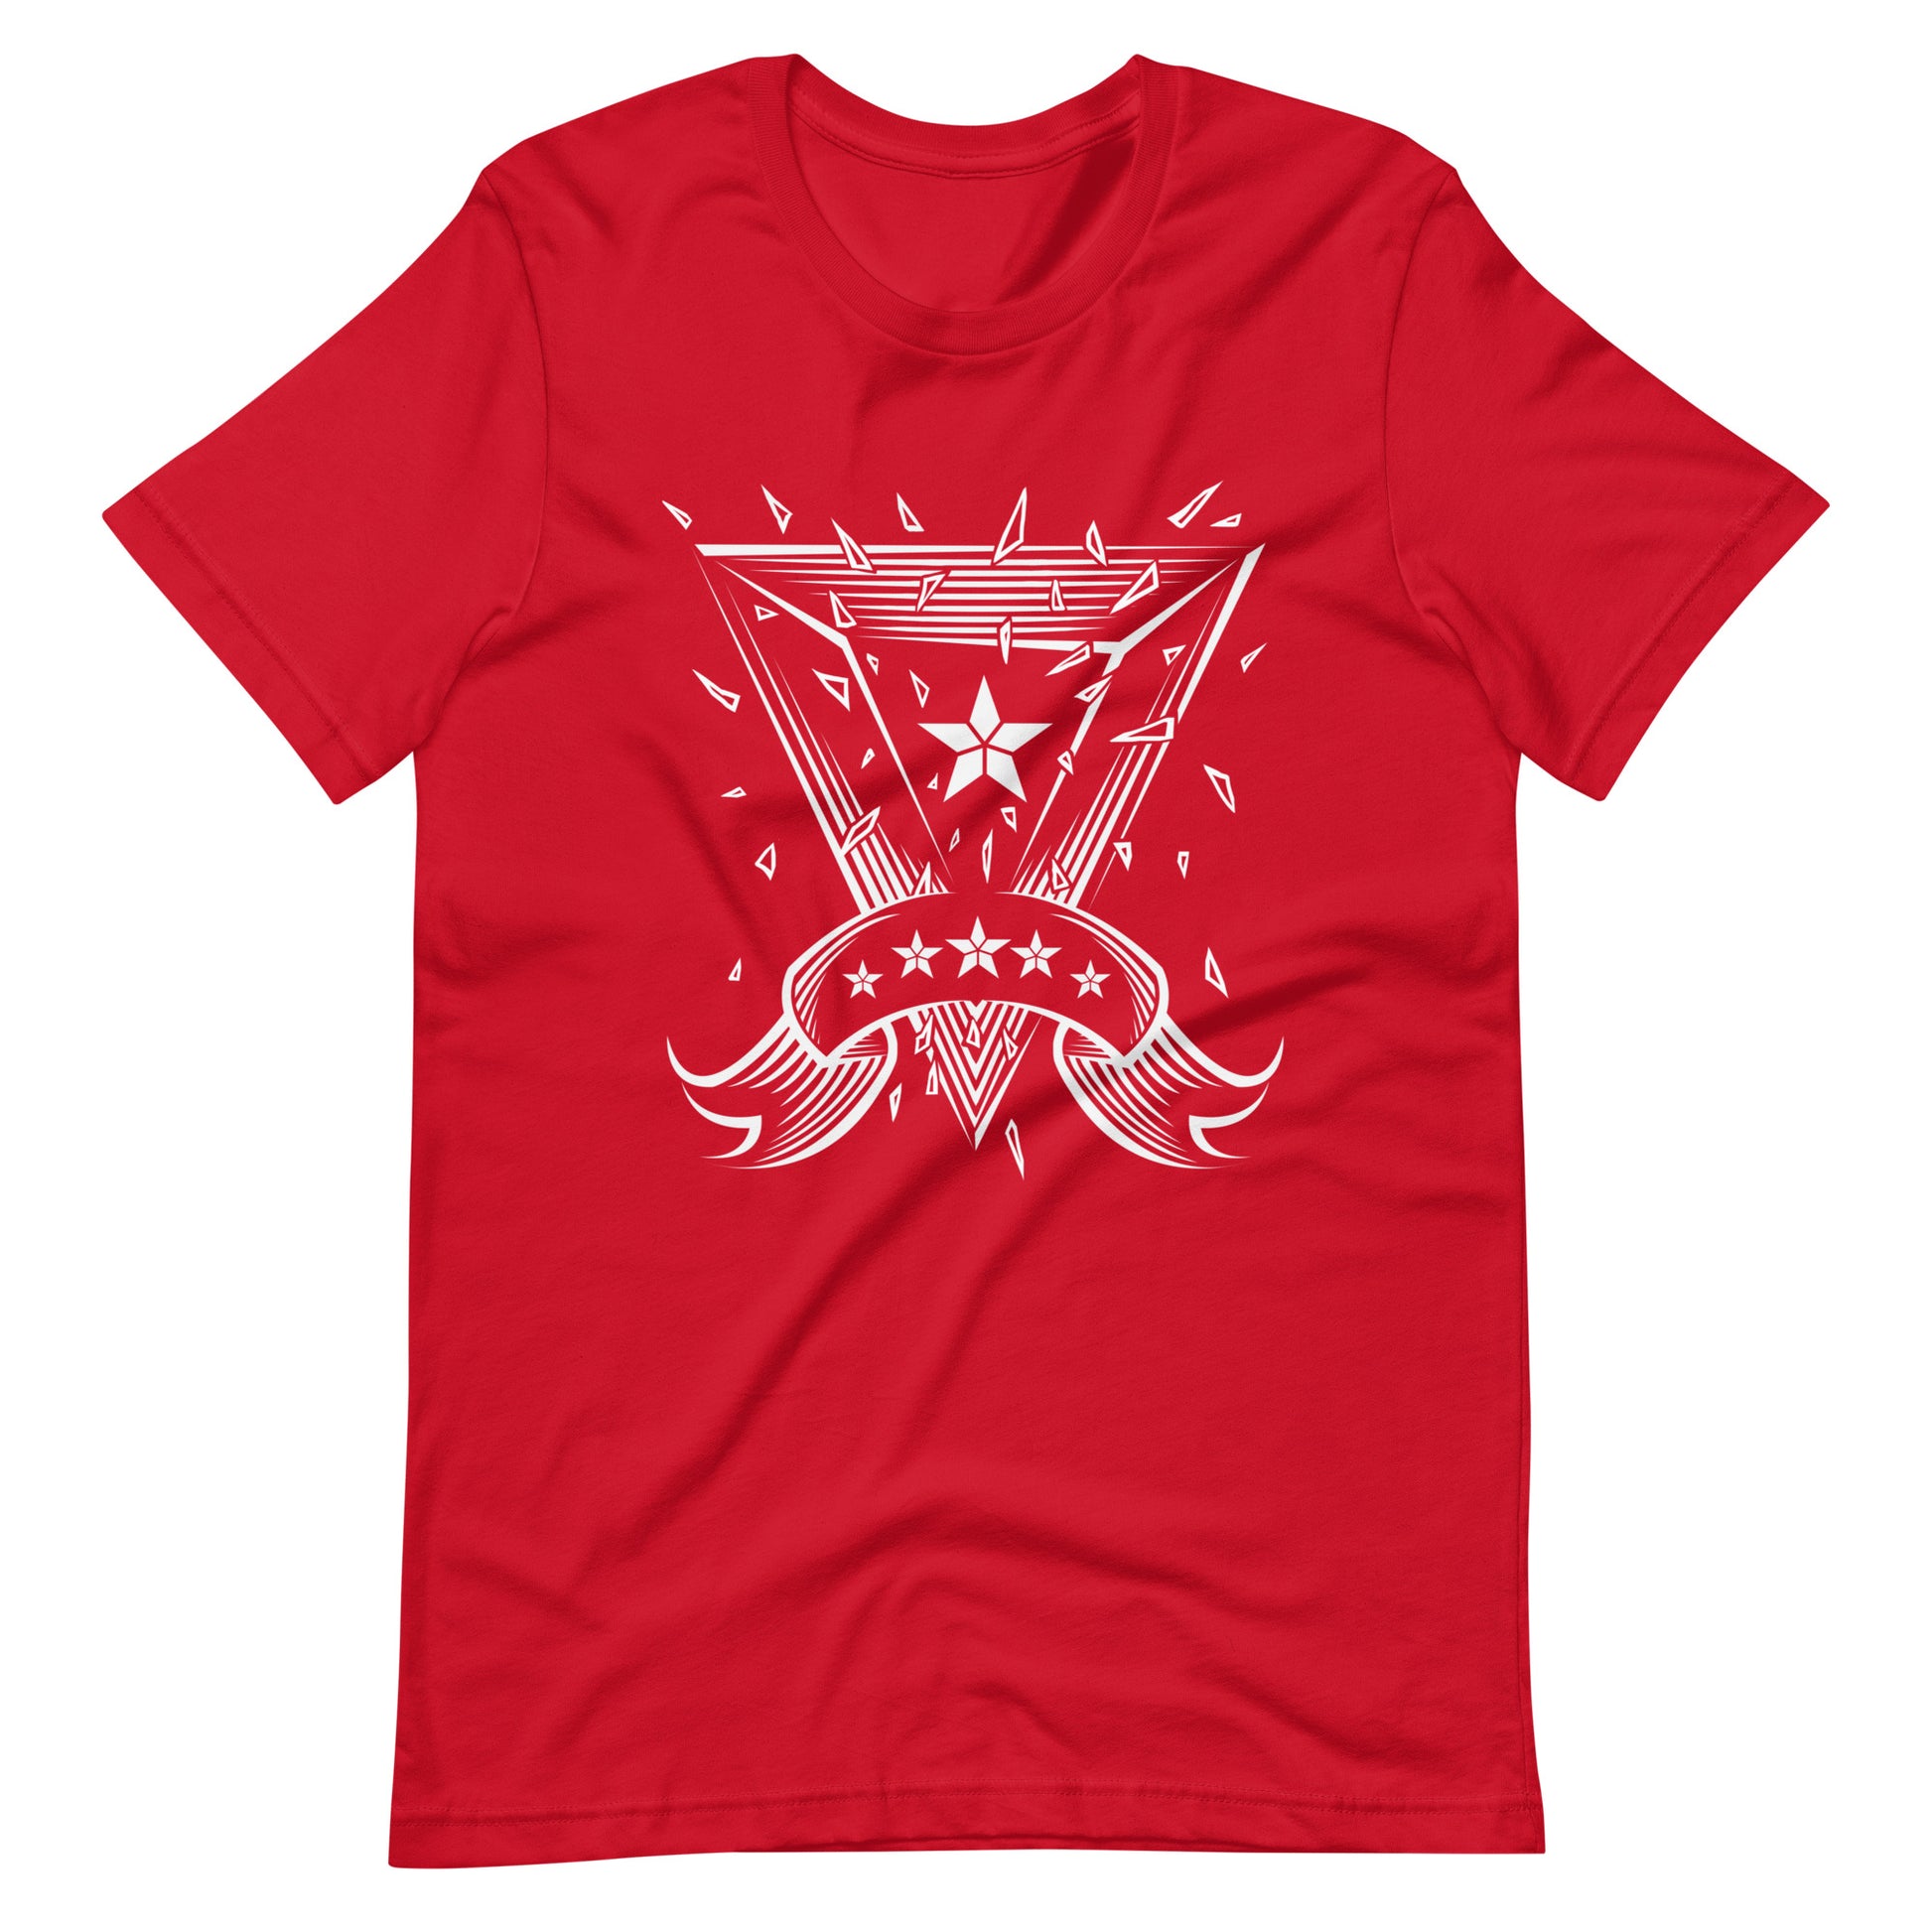 Starlight - Men's t-shirt - Red Front